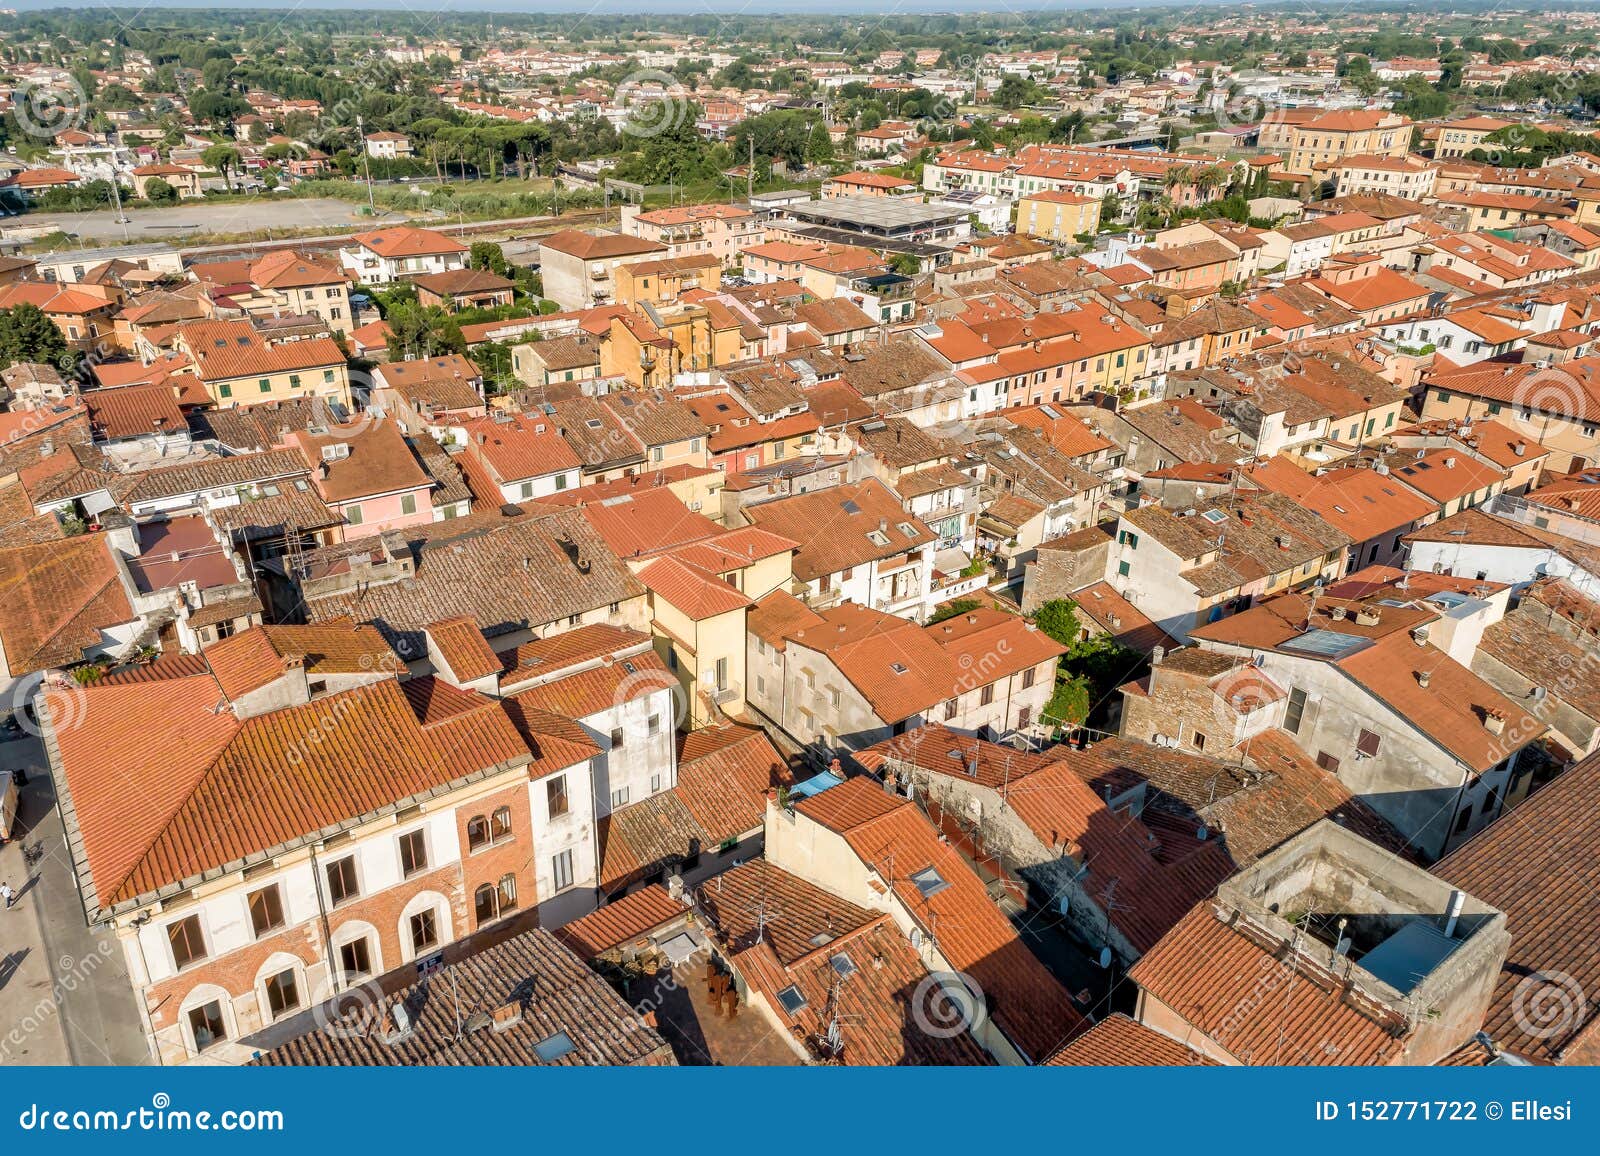 aerial view of small town pietrasanta in versilia, tuscany, italy